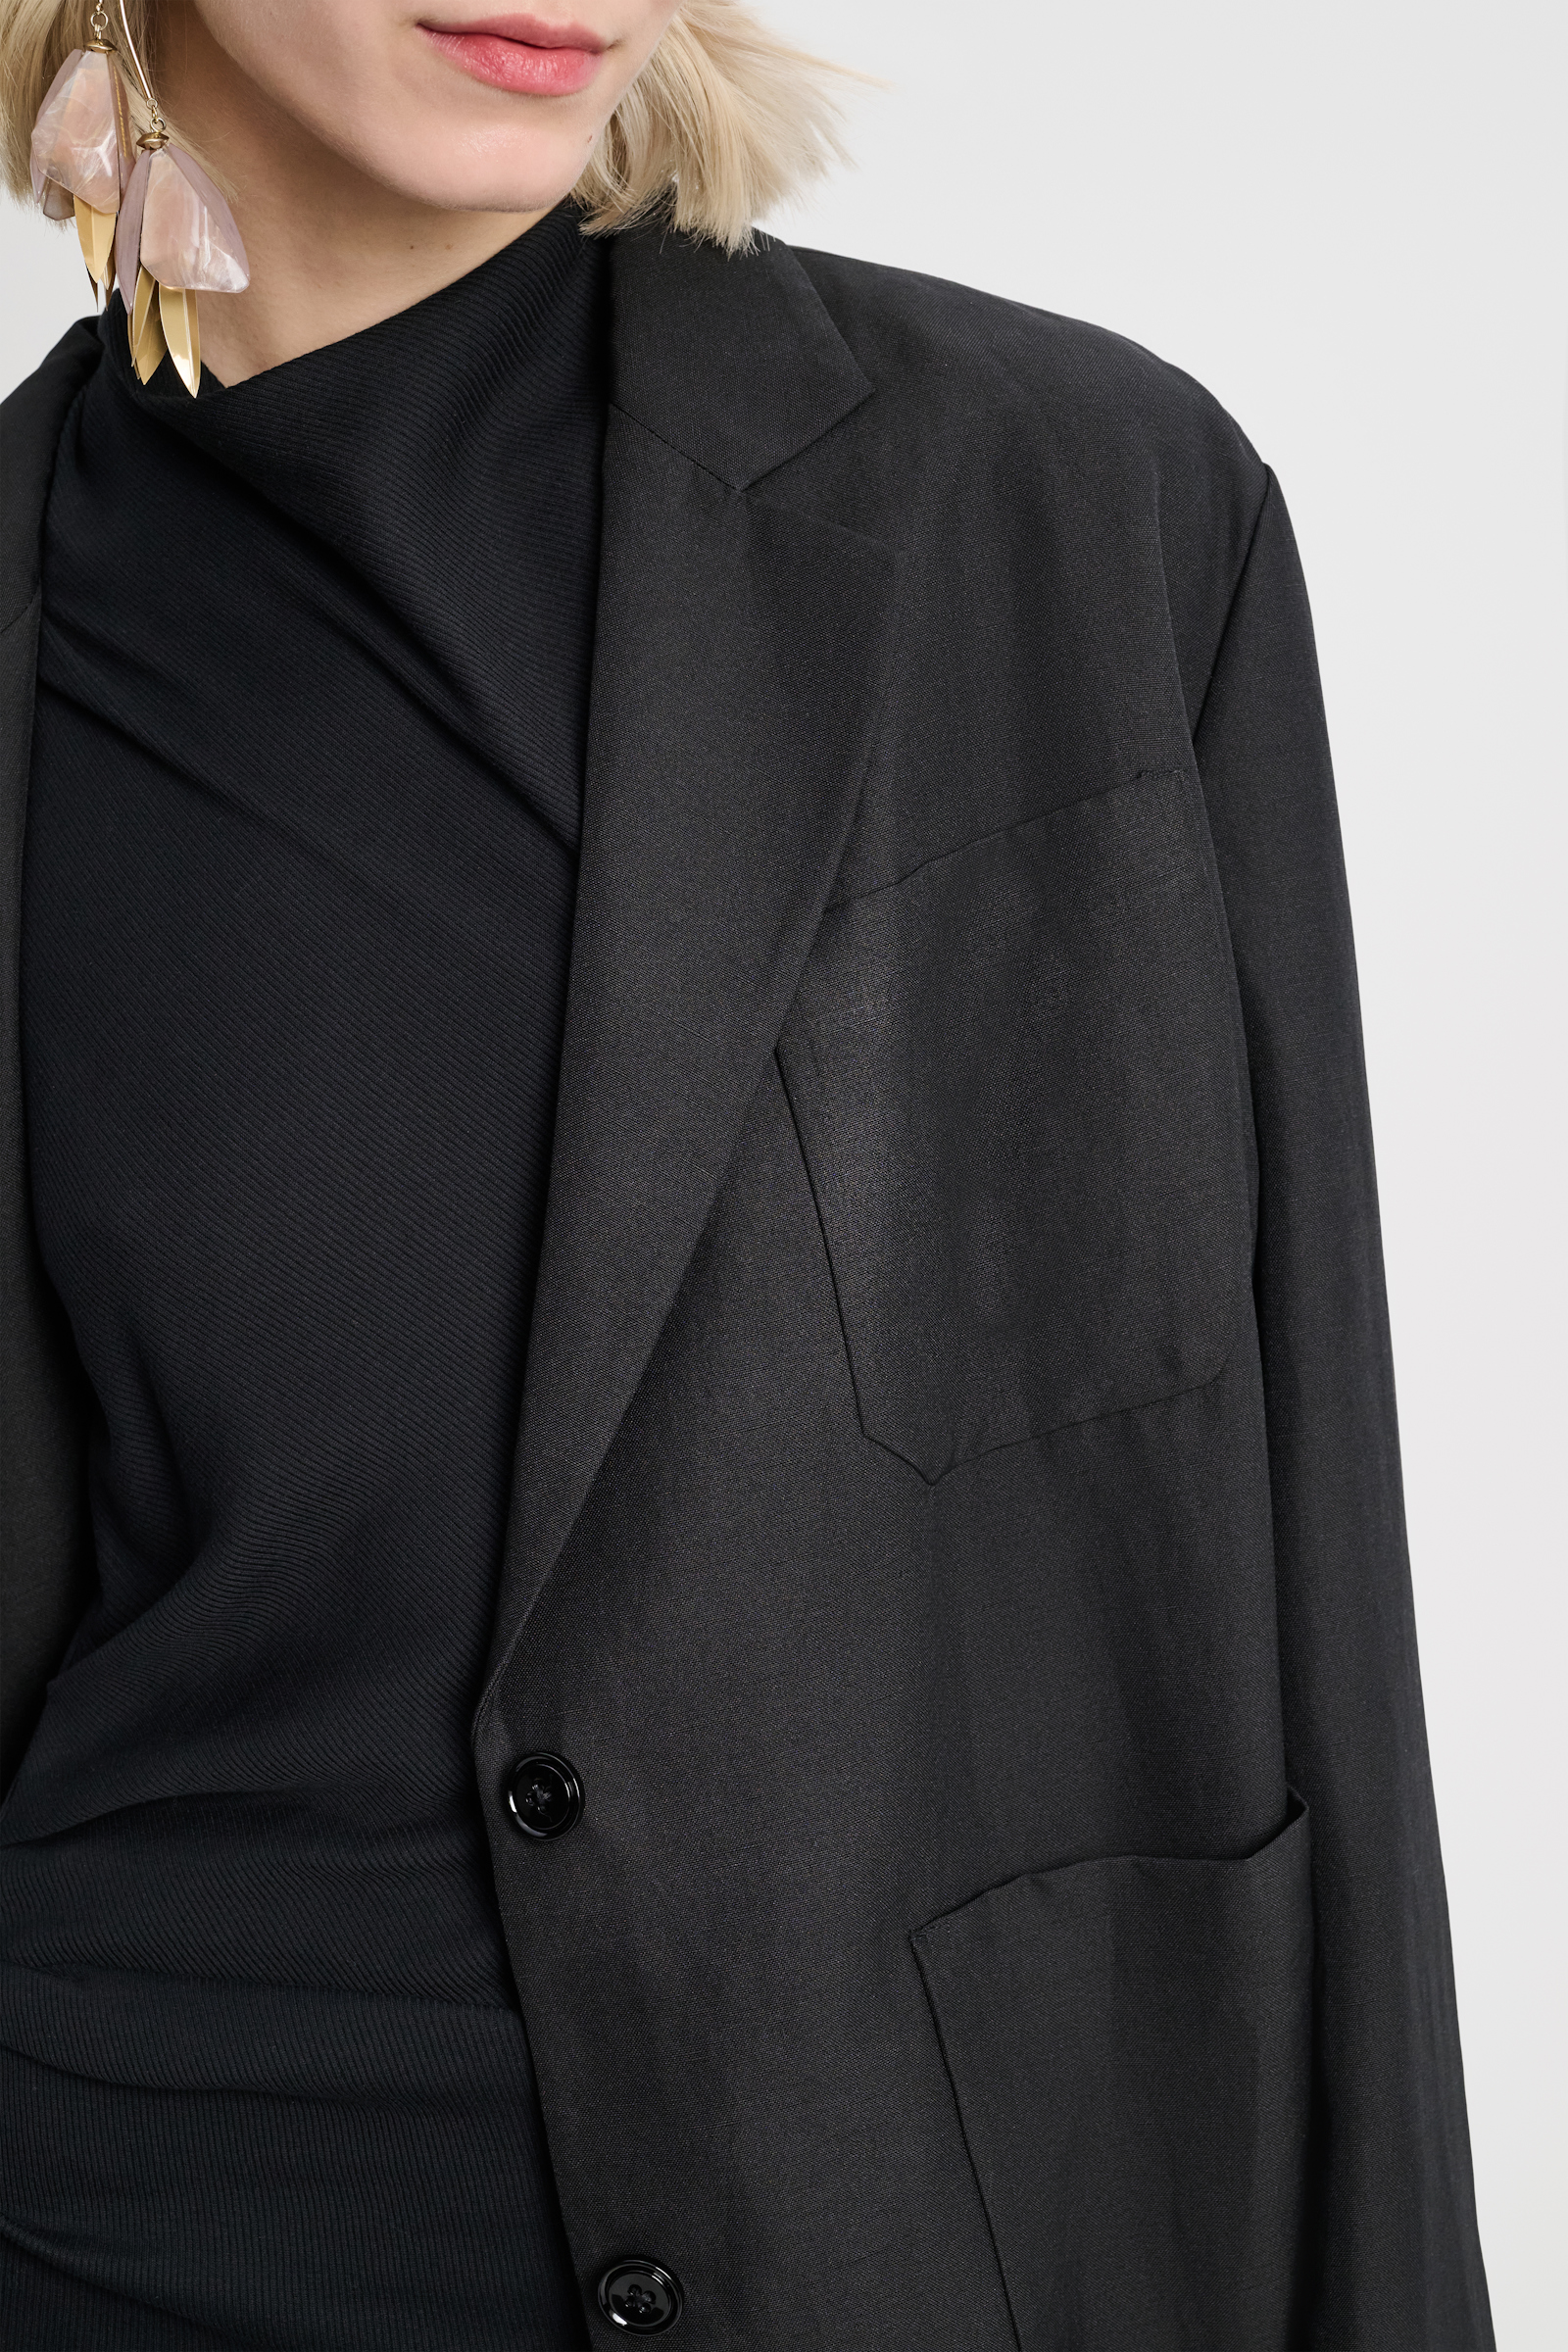 Dorothee Schumacher Linen blend blazer with notched lapel pure black